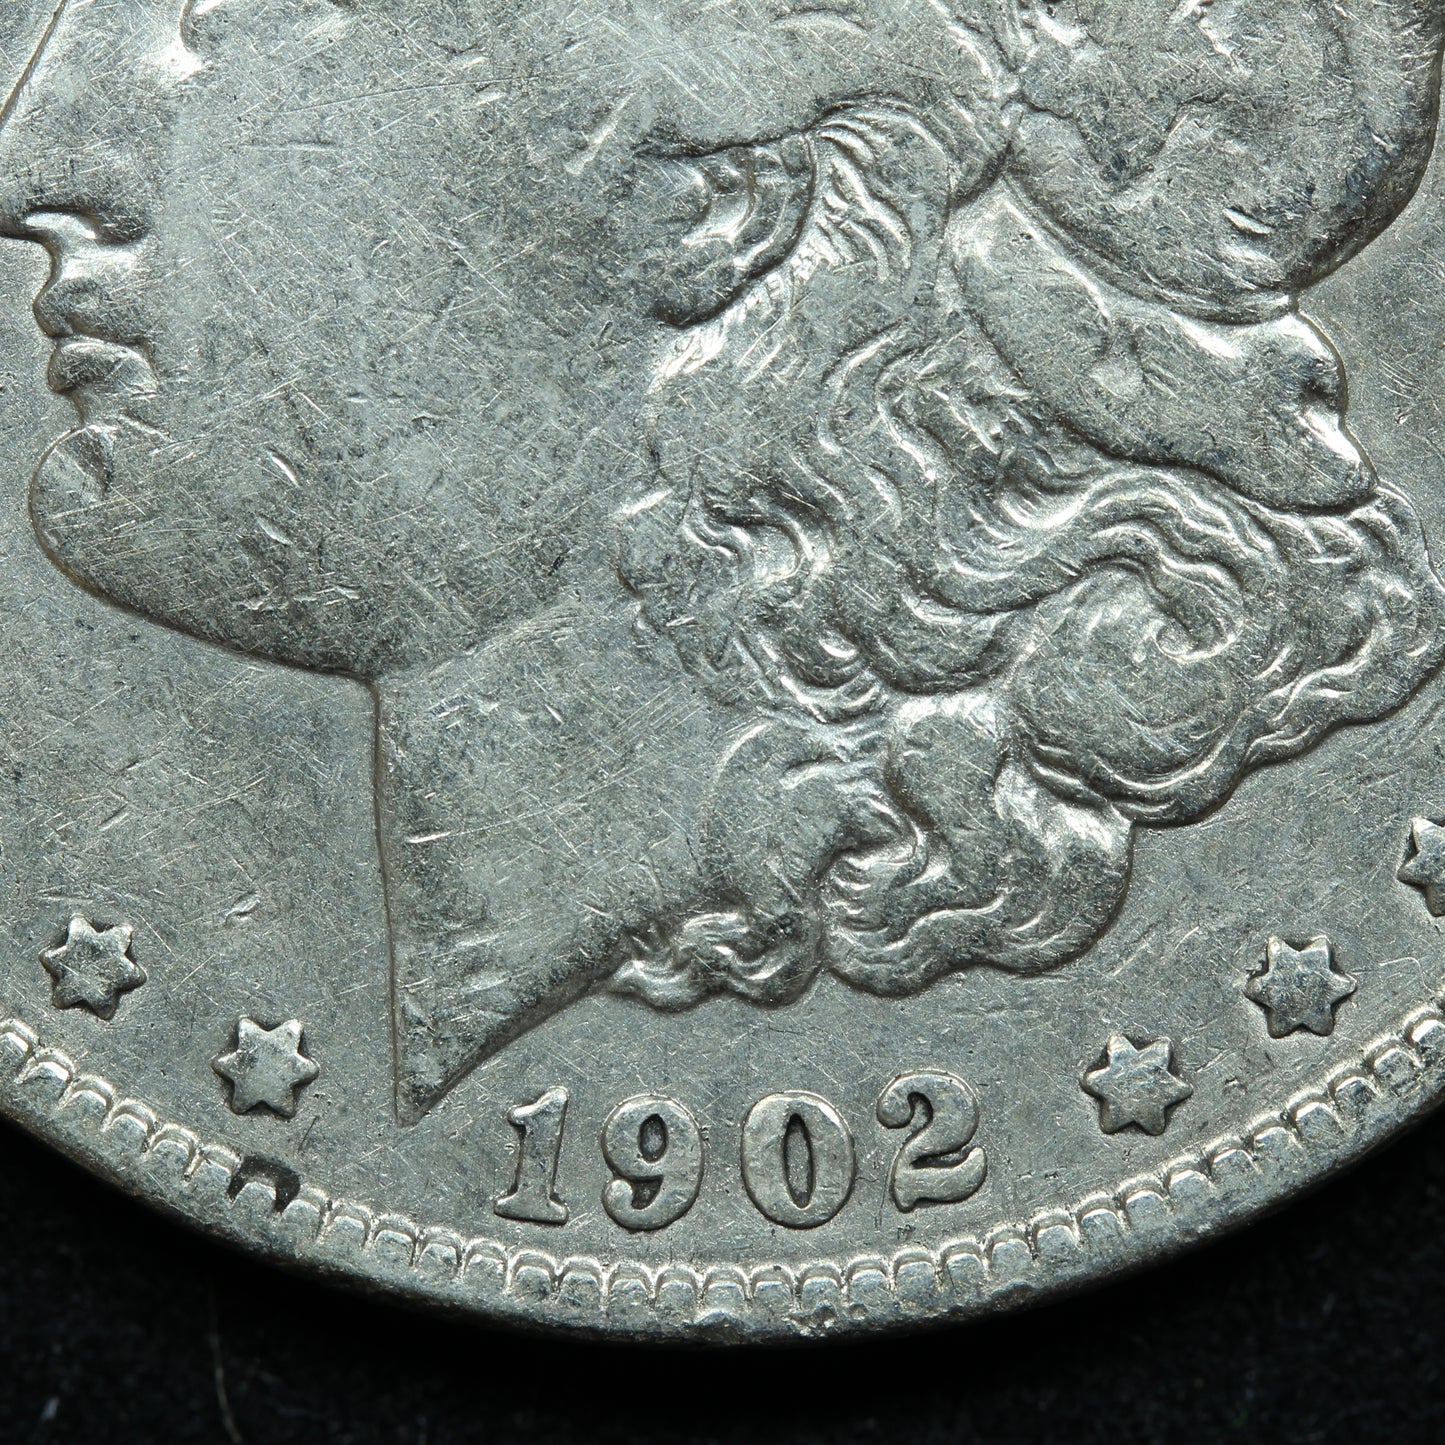 1902 Morgan Silver Dollar - Philadelphia - Beautiful!